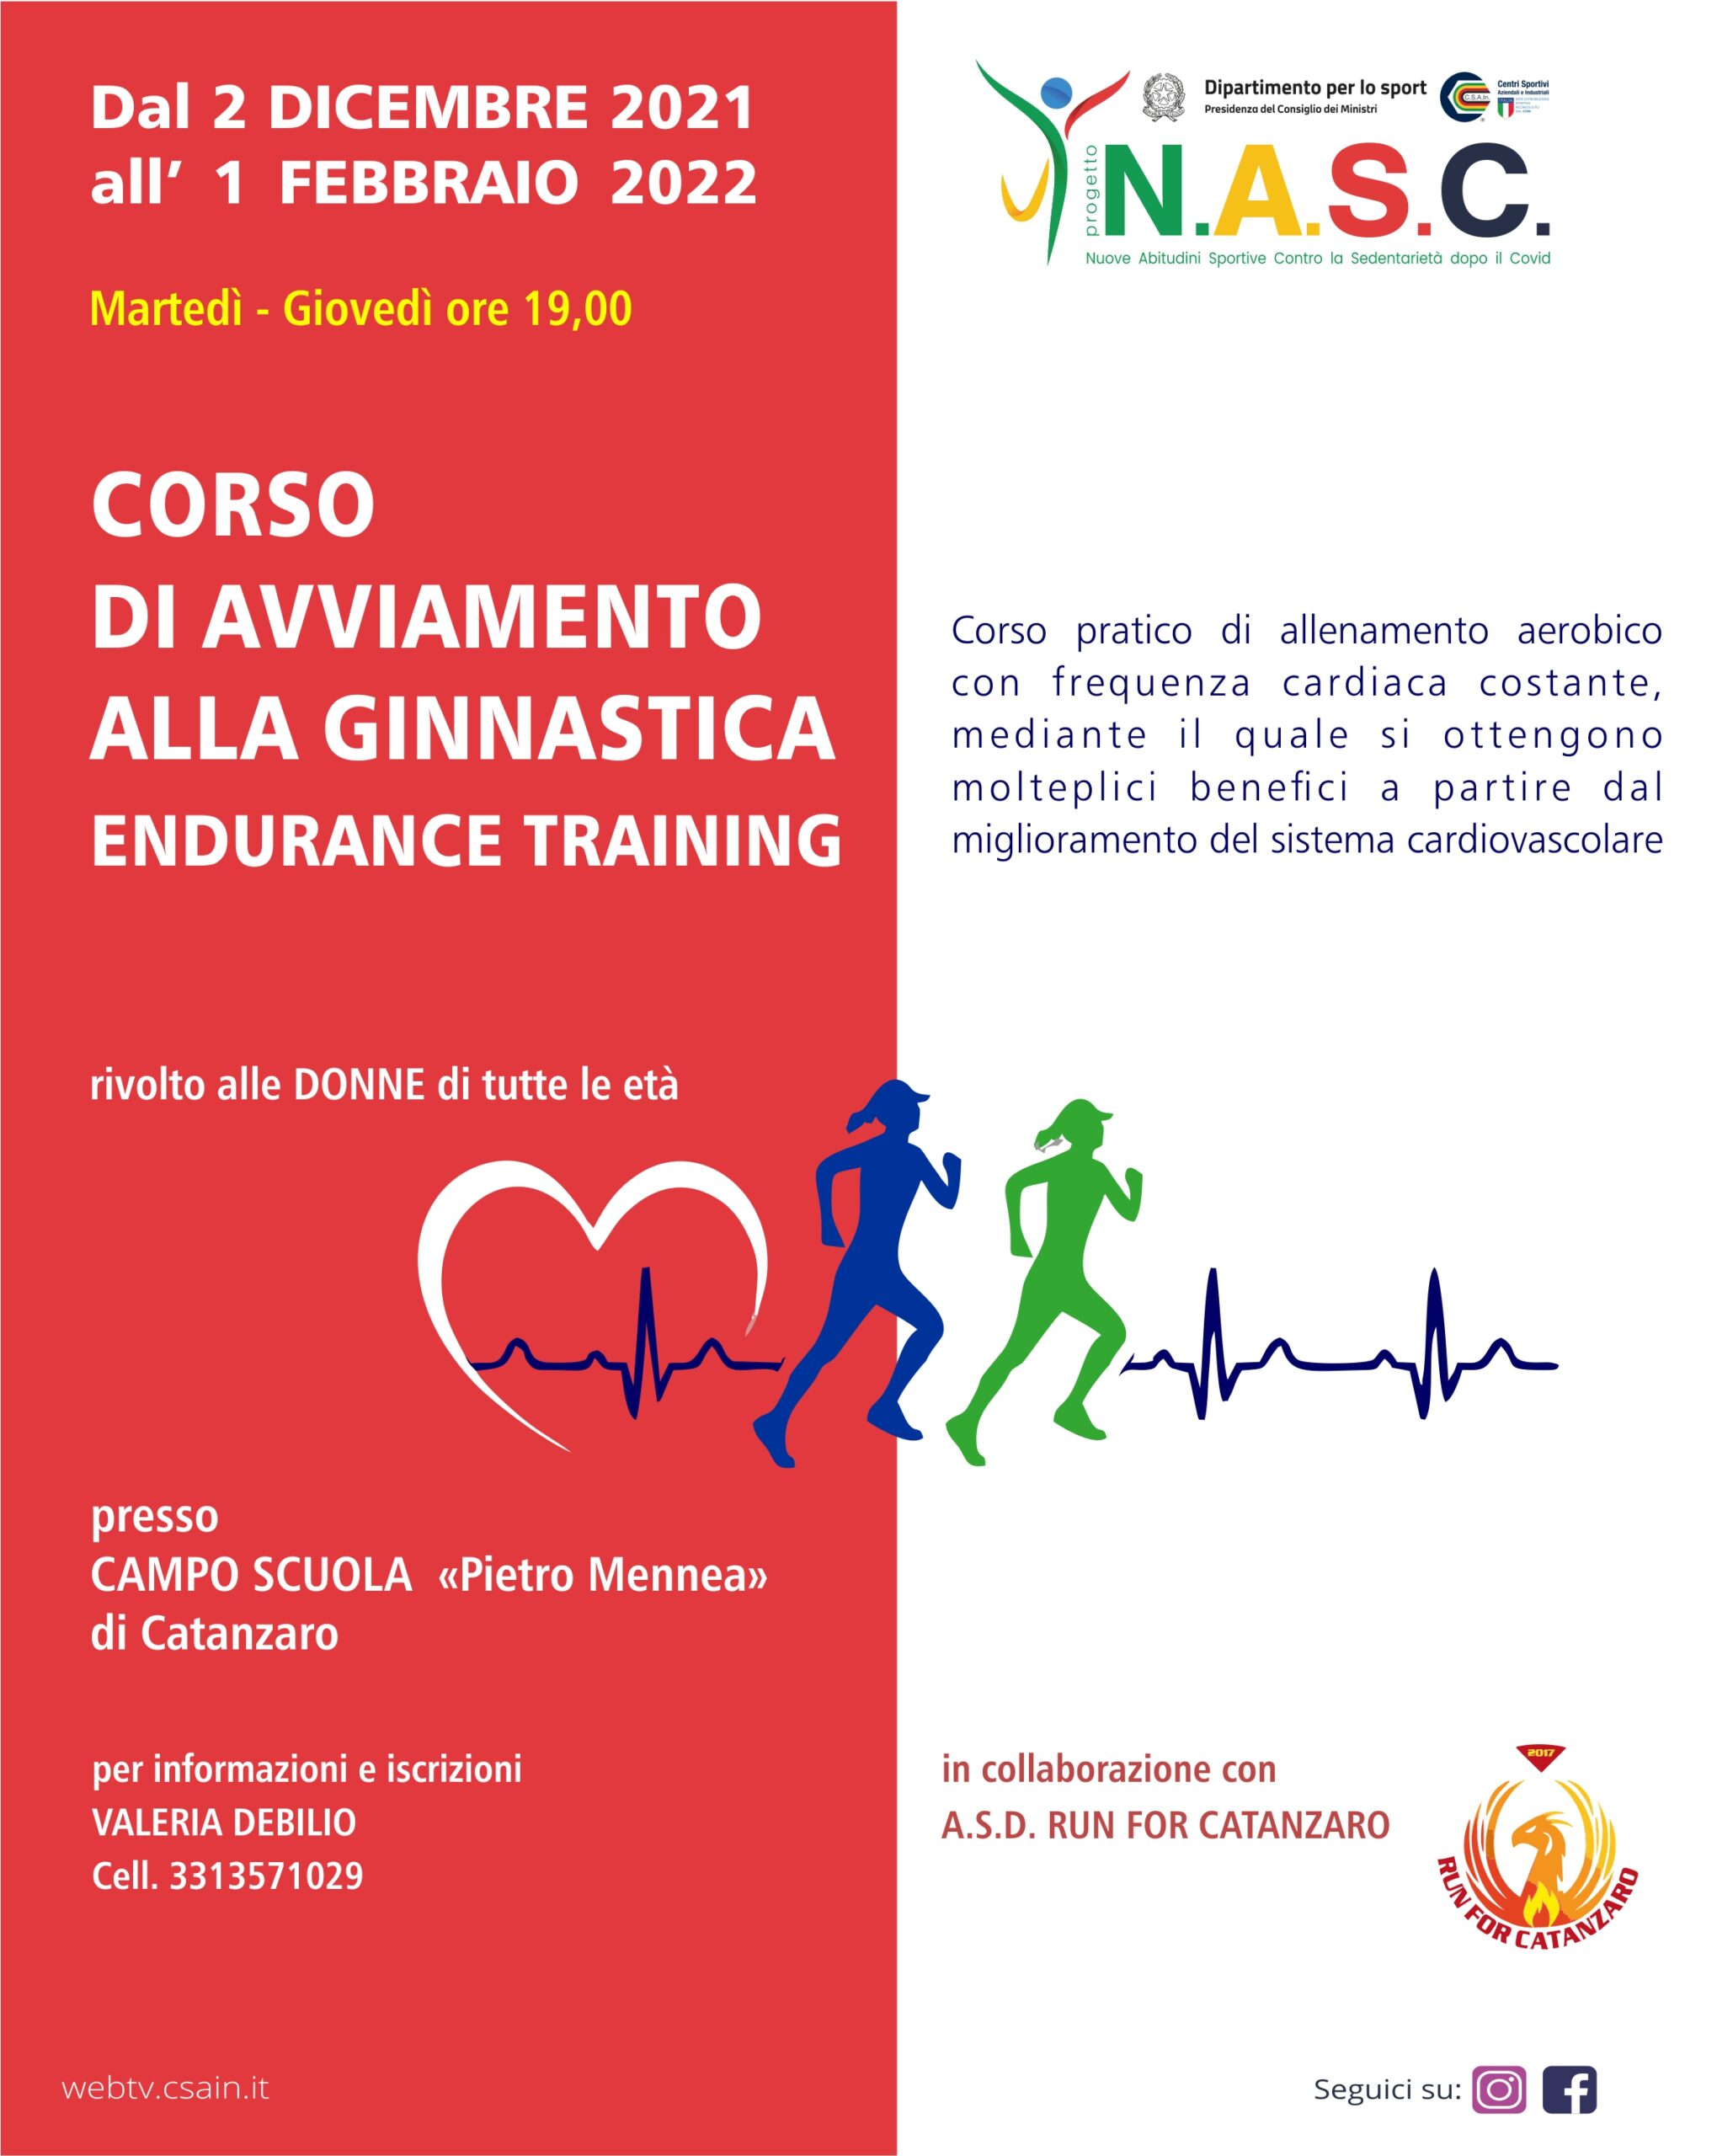 Ginnastica - Endurance Training - Catanzaro